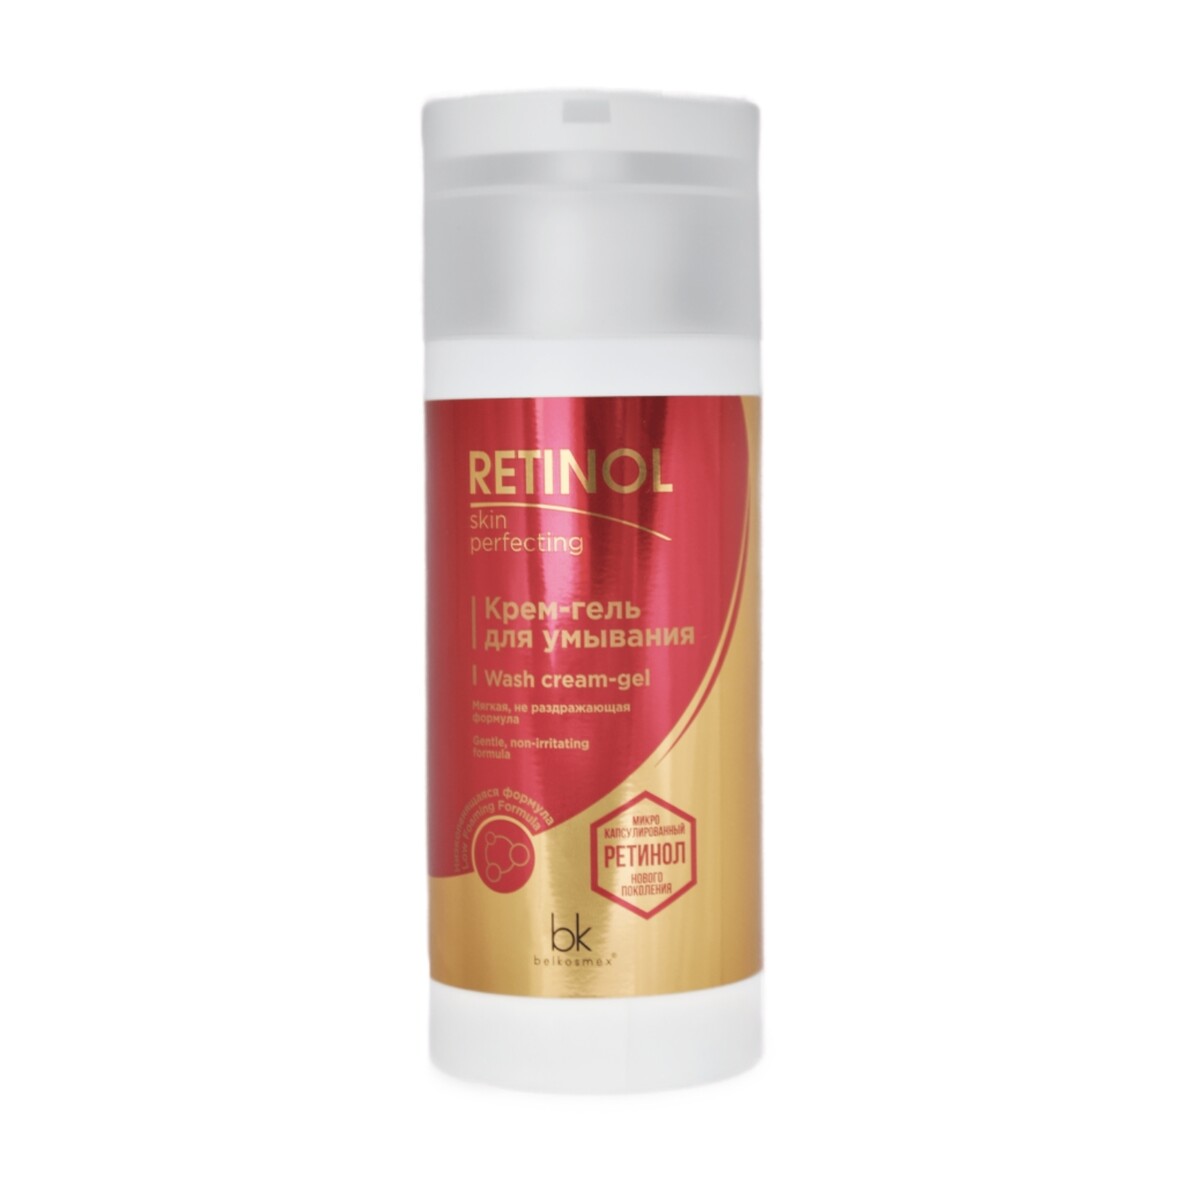 Retinol skin perfecting крем-гель для умывания 150г pro retinol 12 vitamins гель для умывания 260г